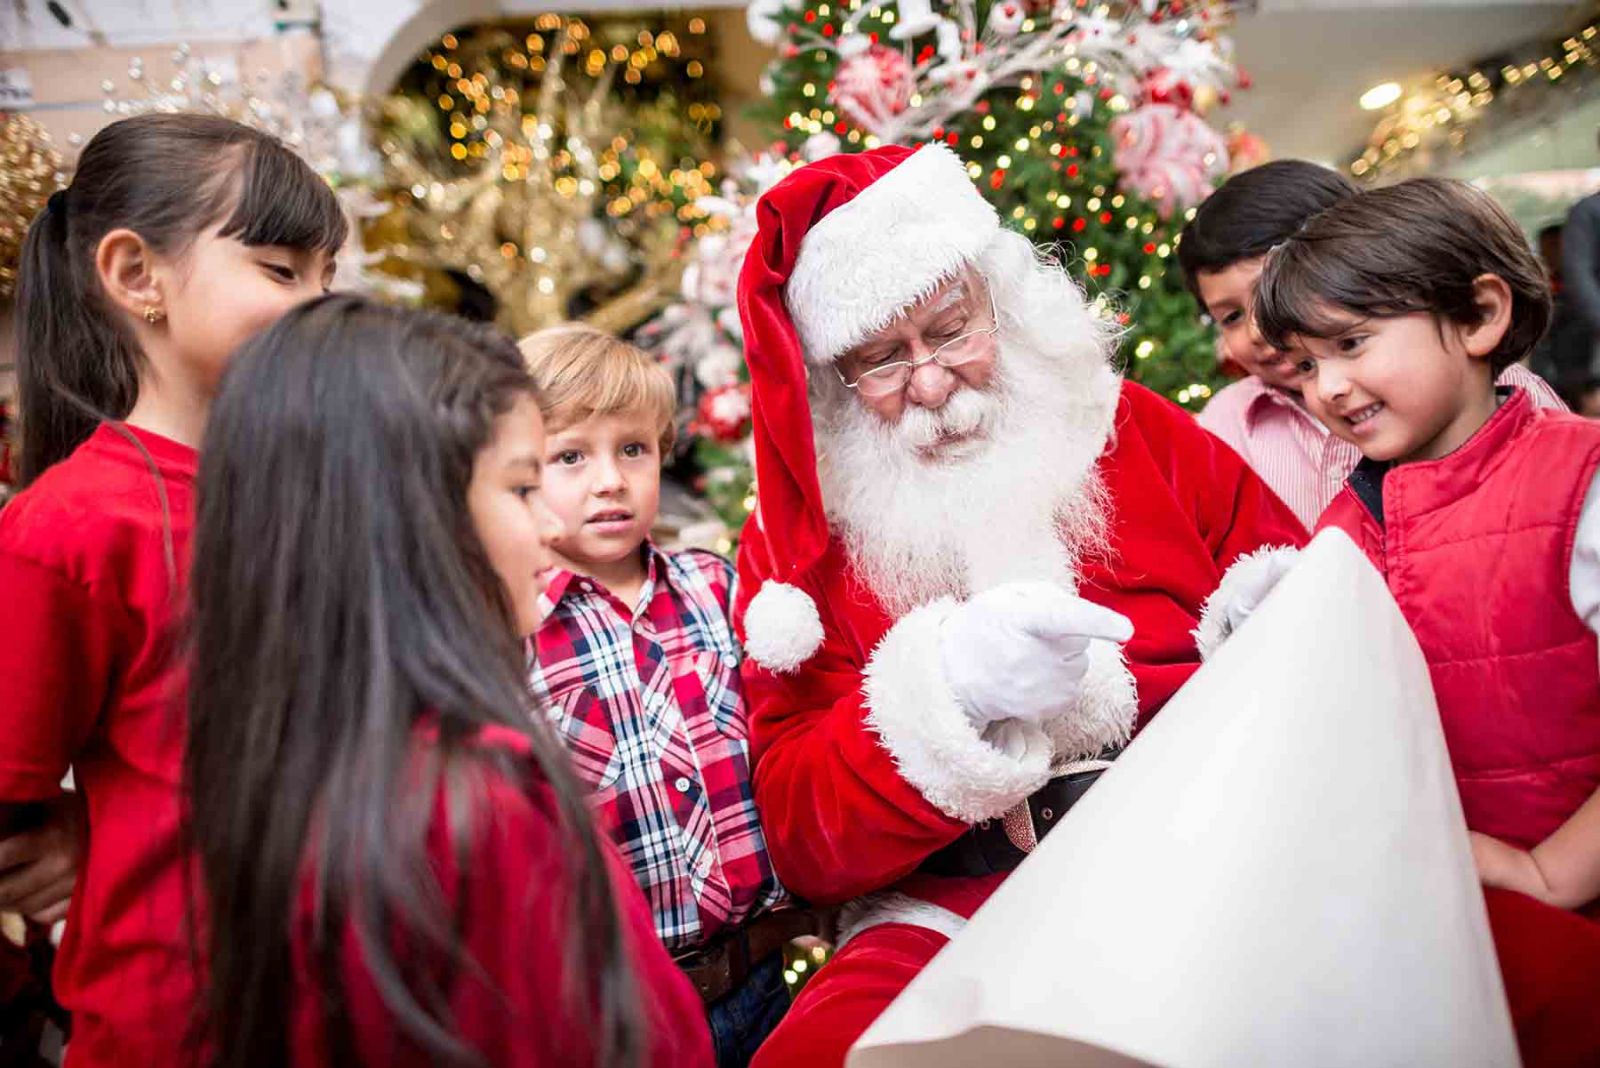 Children meeting with Santa Claus